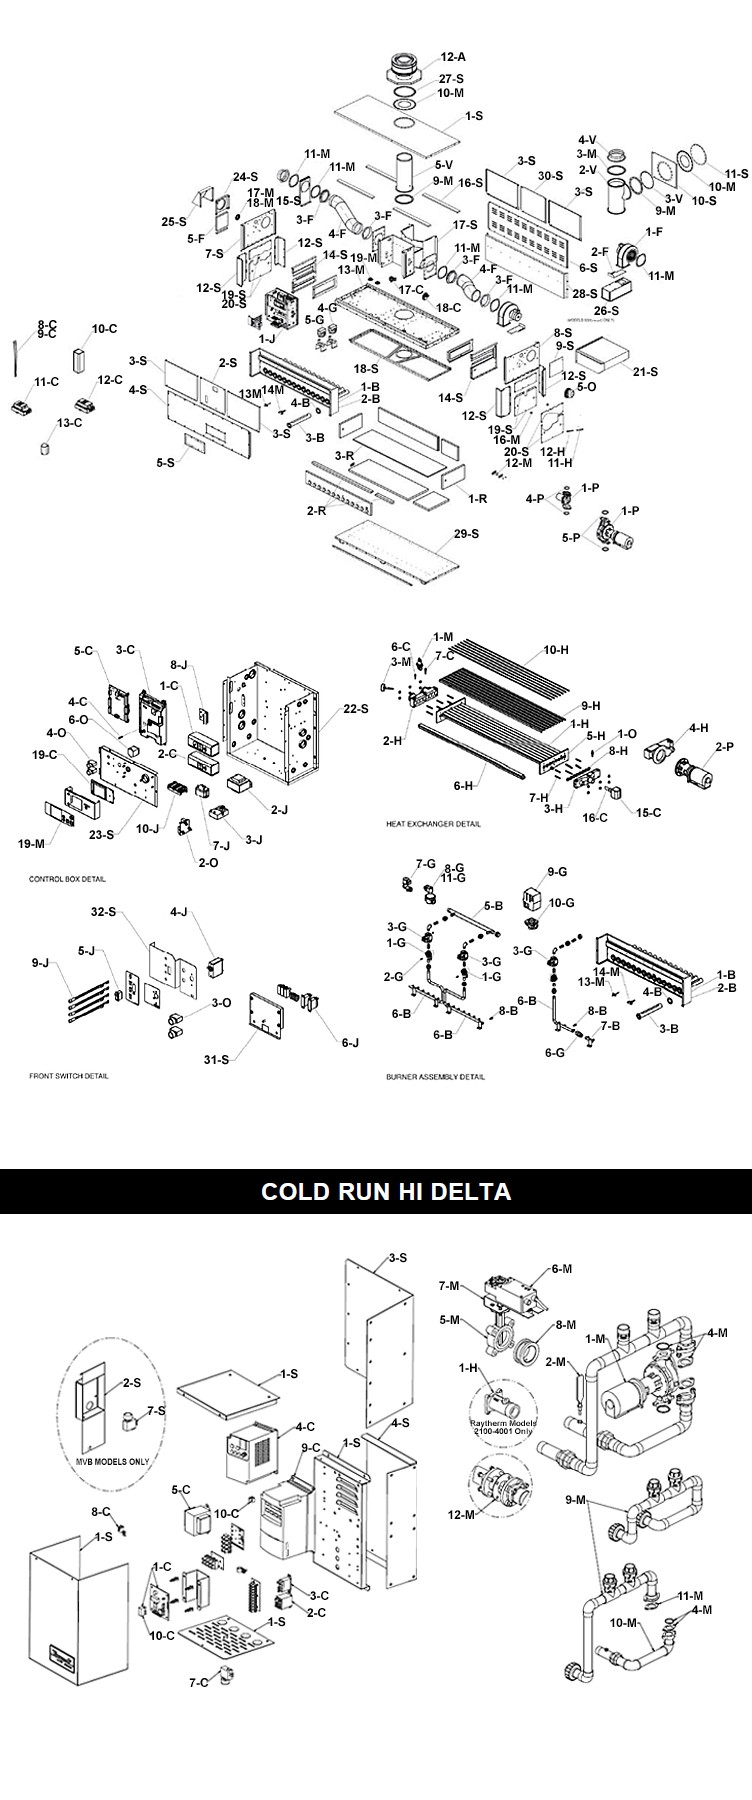 Raypak HI Delta Cold Run P-902C Commercial Indoor-Outdoor Swimming Pool Heater | Propane Gas 900,000 BTUH | 016098 Parts Schematic